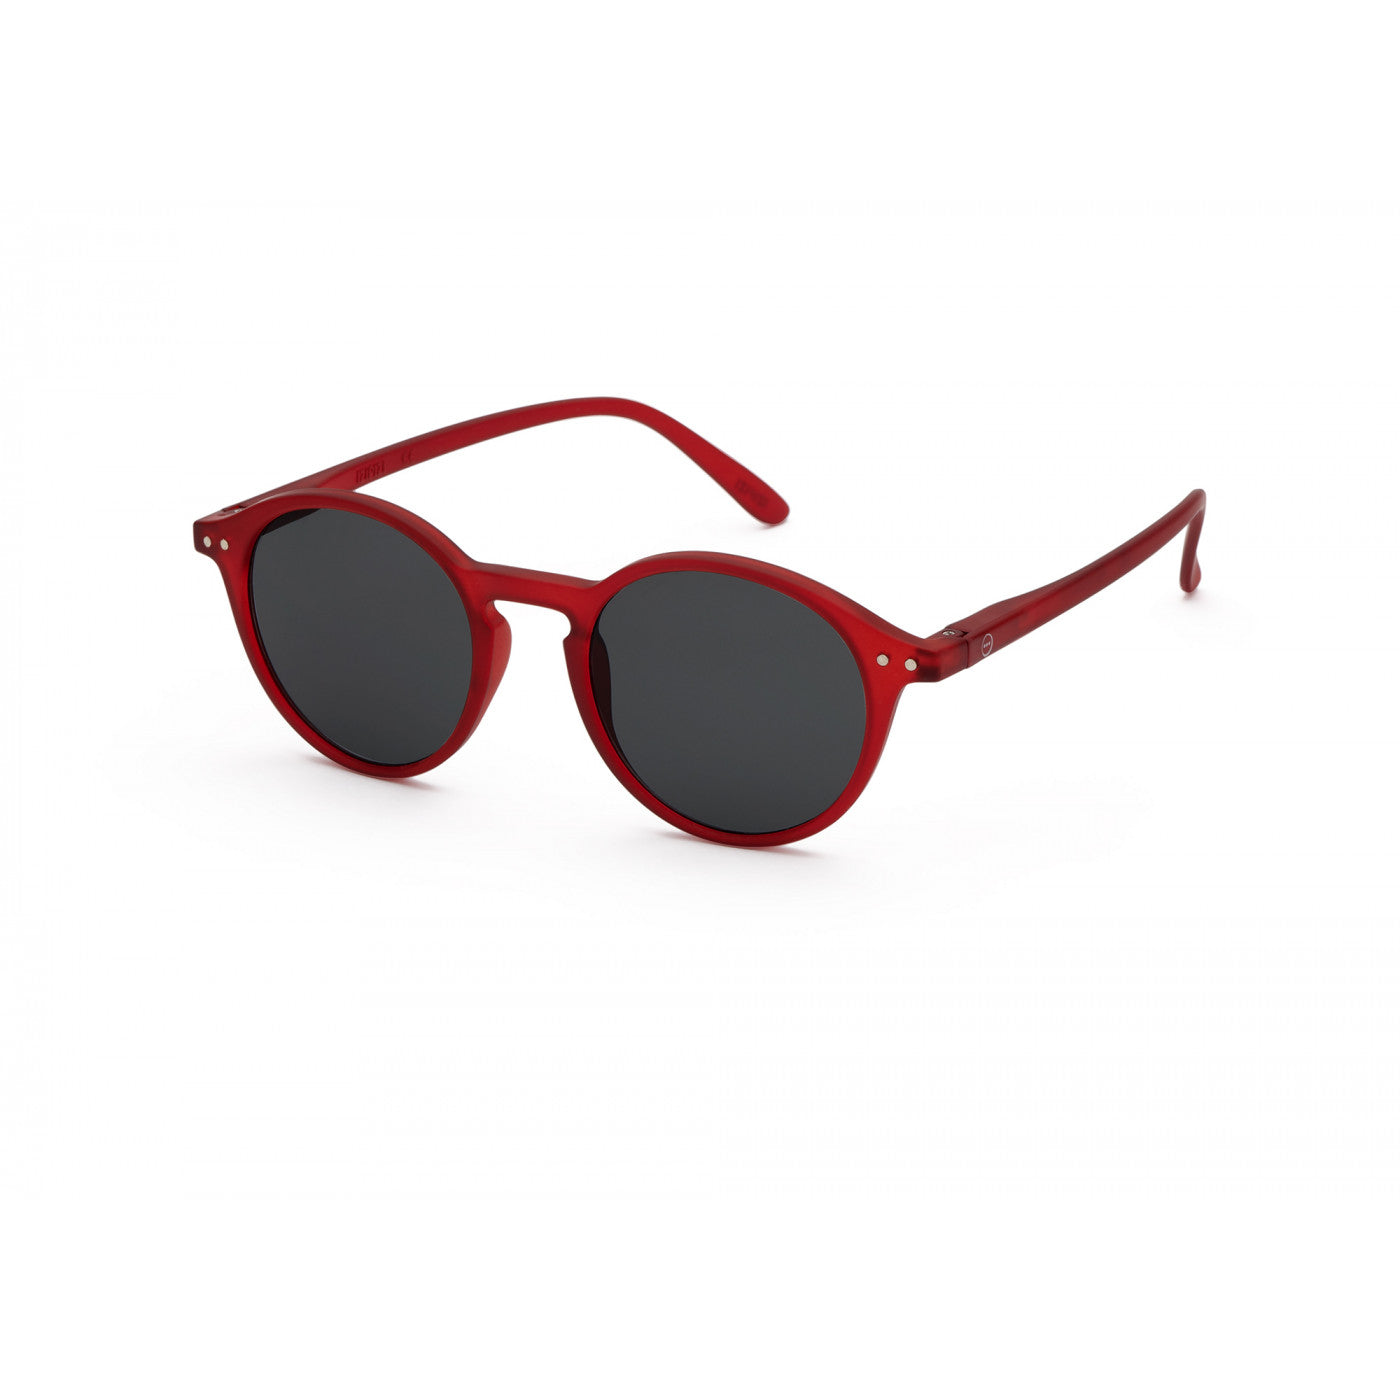 Óculos de Sol #D Vermelhos Cristal